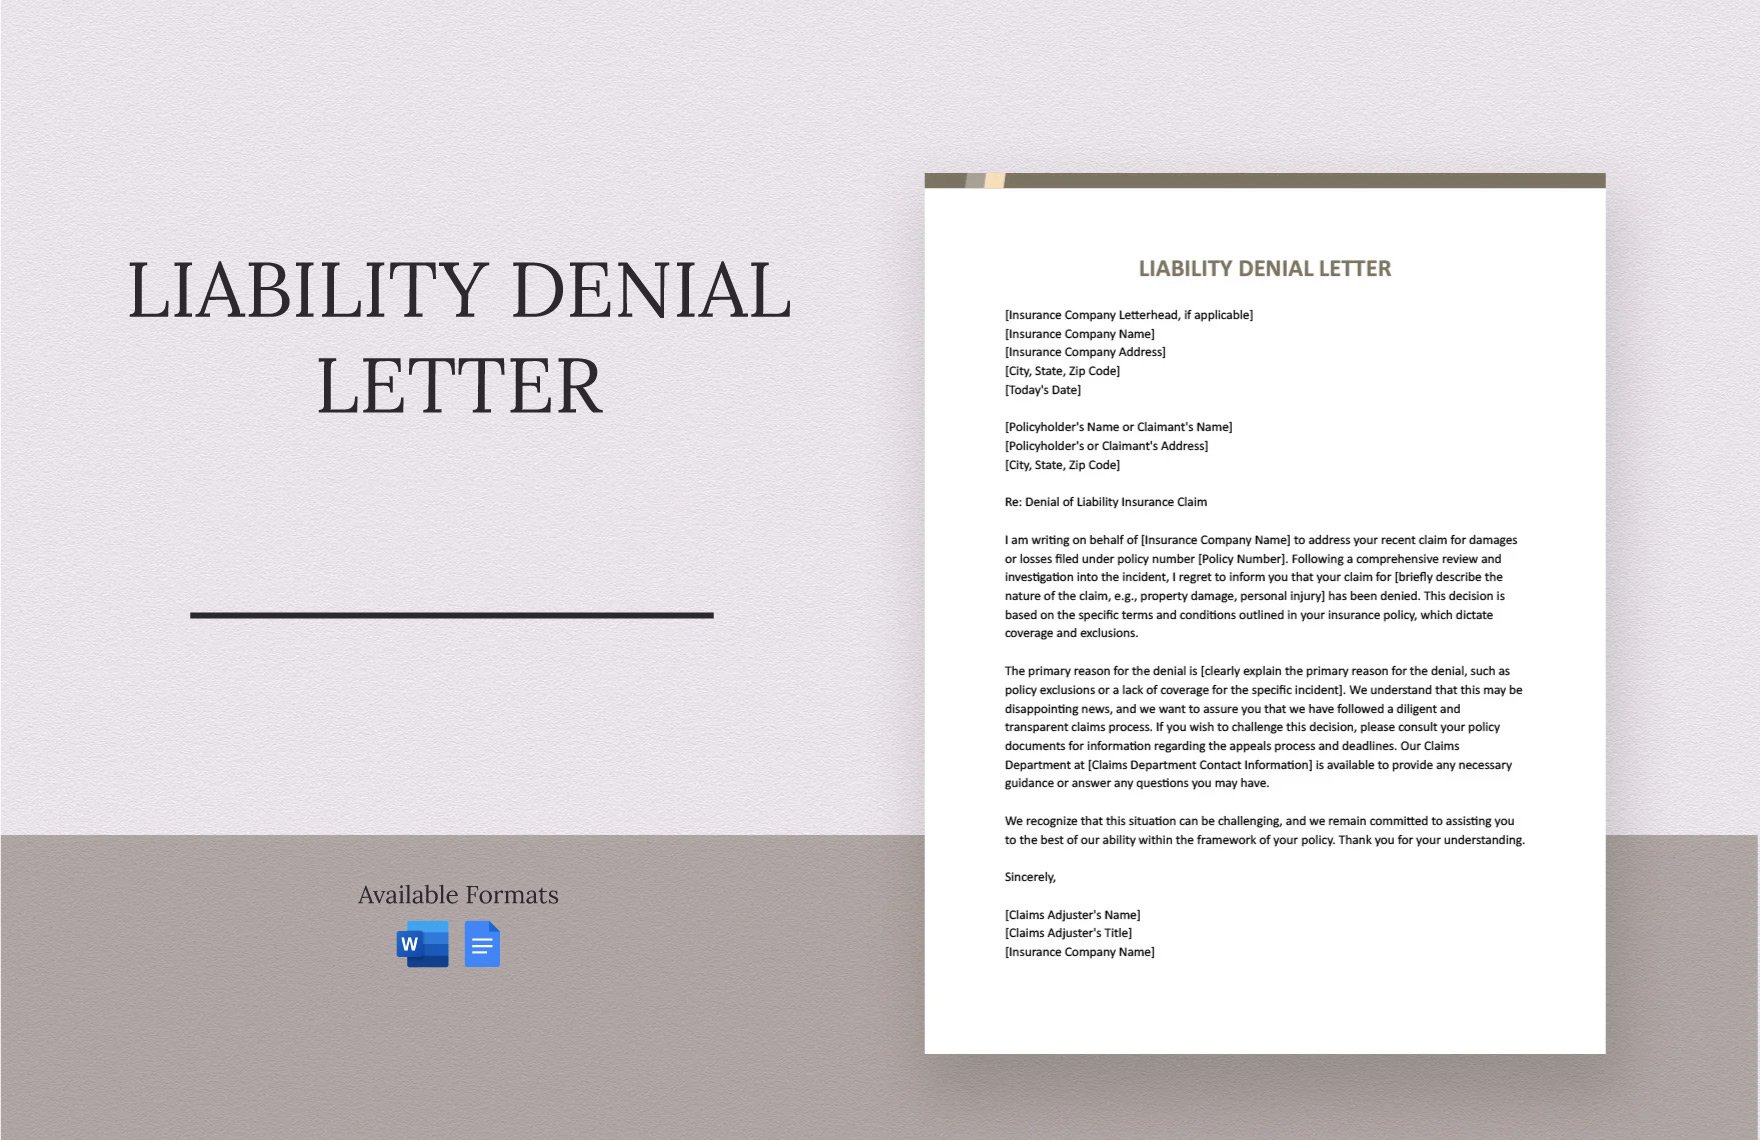 Liability Denial Letter in Word, Google Docs